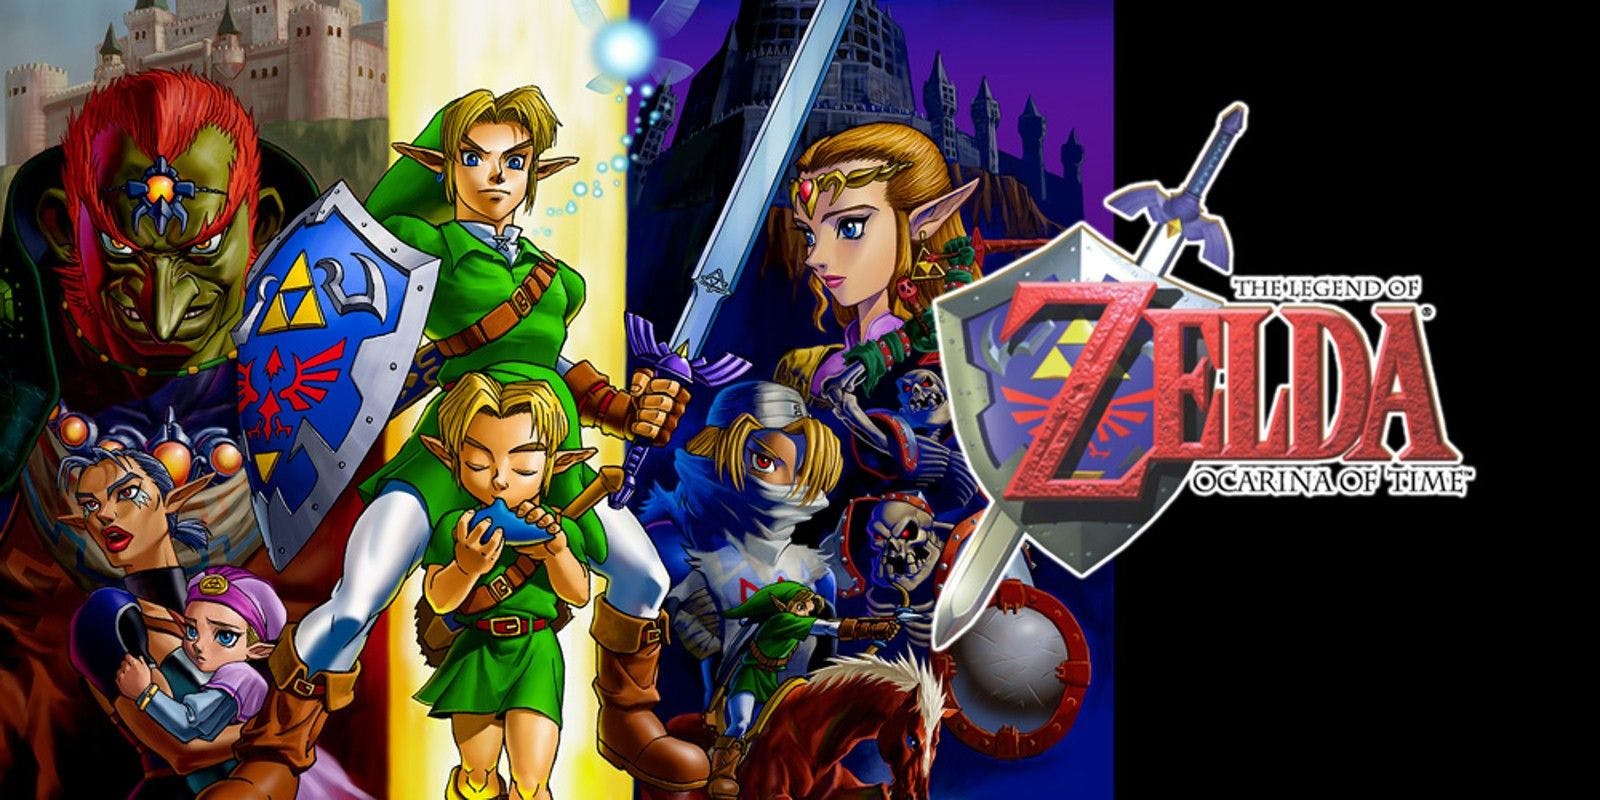 The Legend of Zelda: Ocarina of Time Randomizer Banner Image